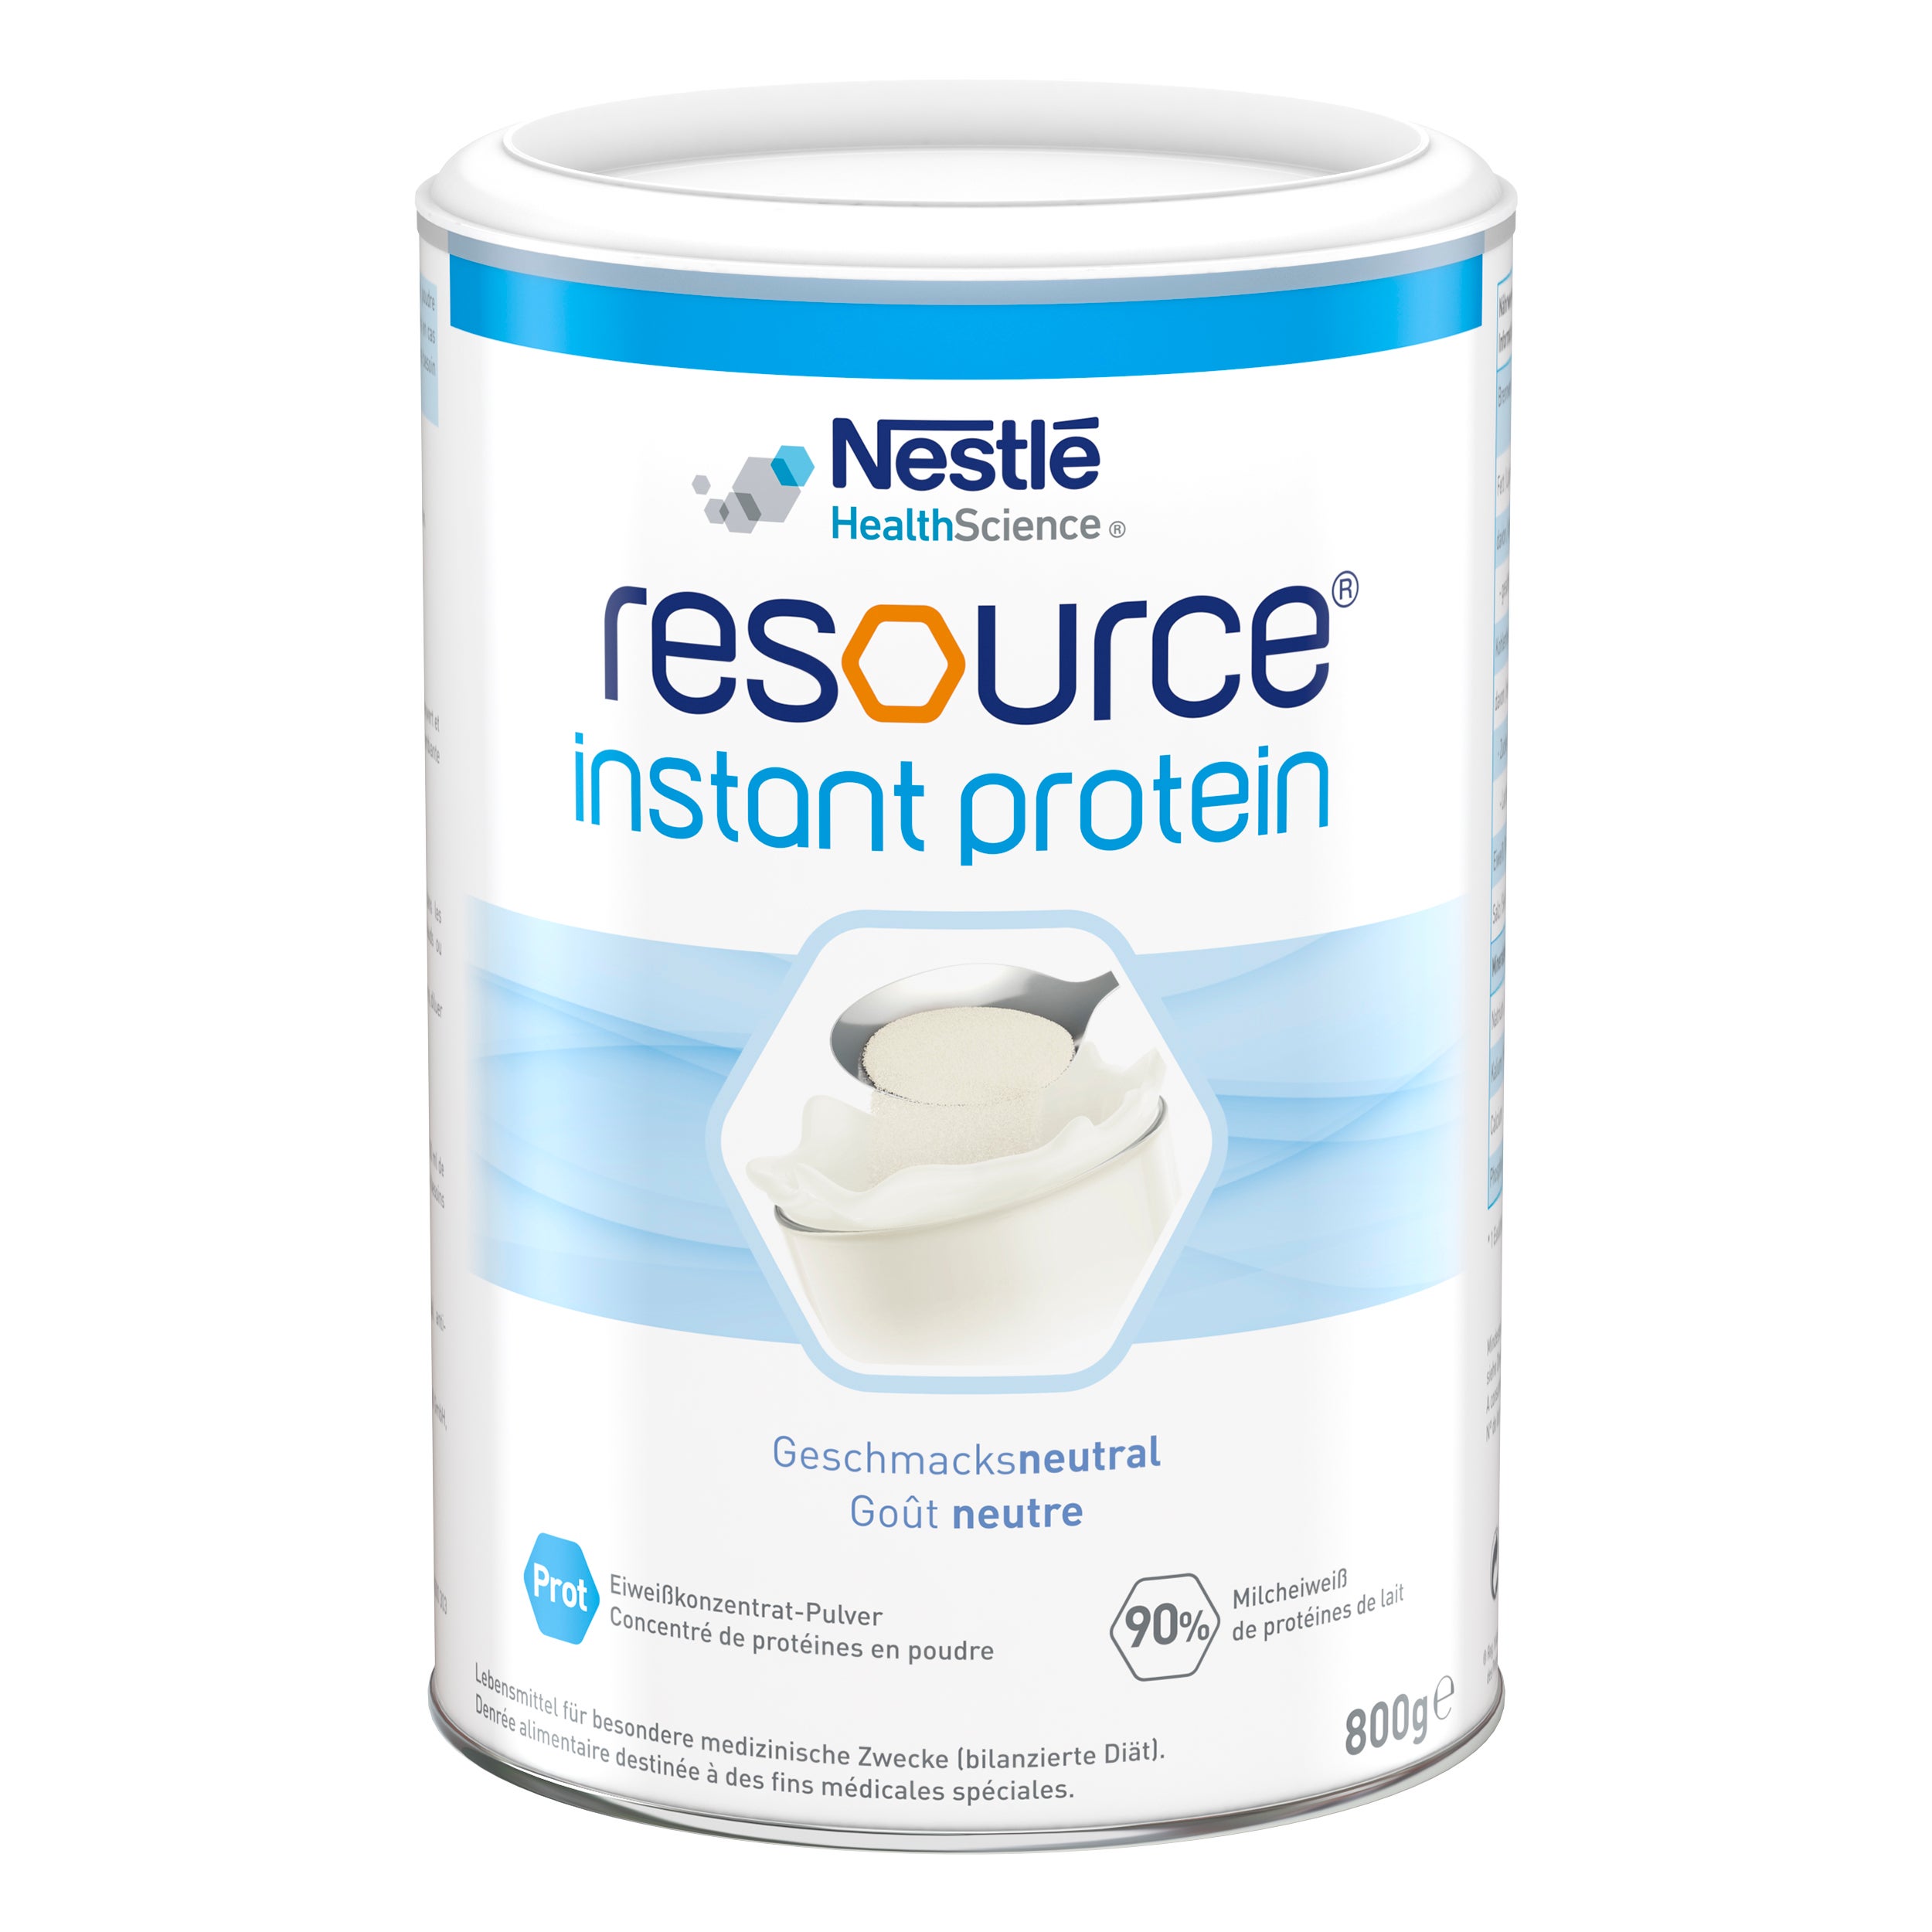 Resource® Instant Protein